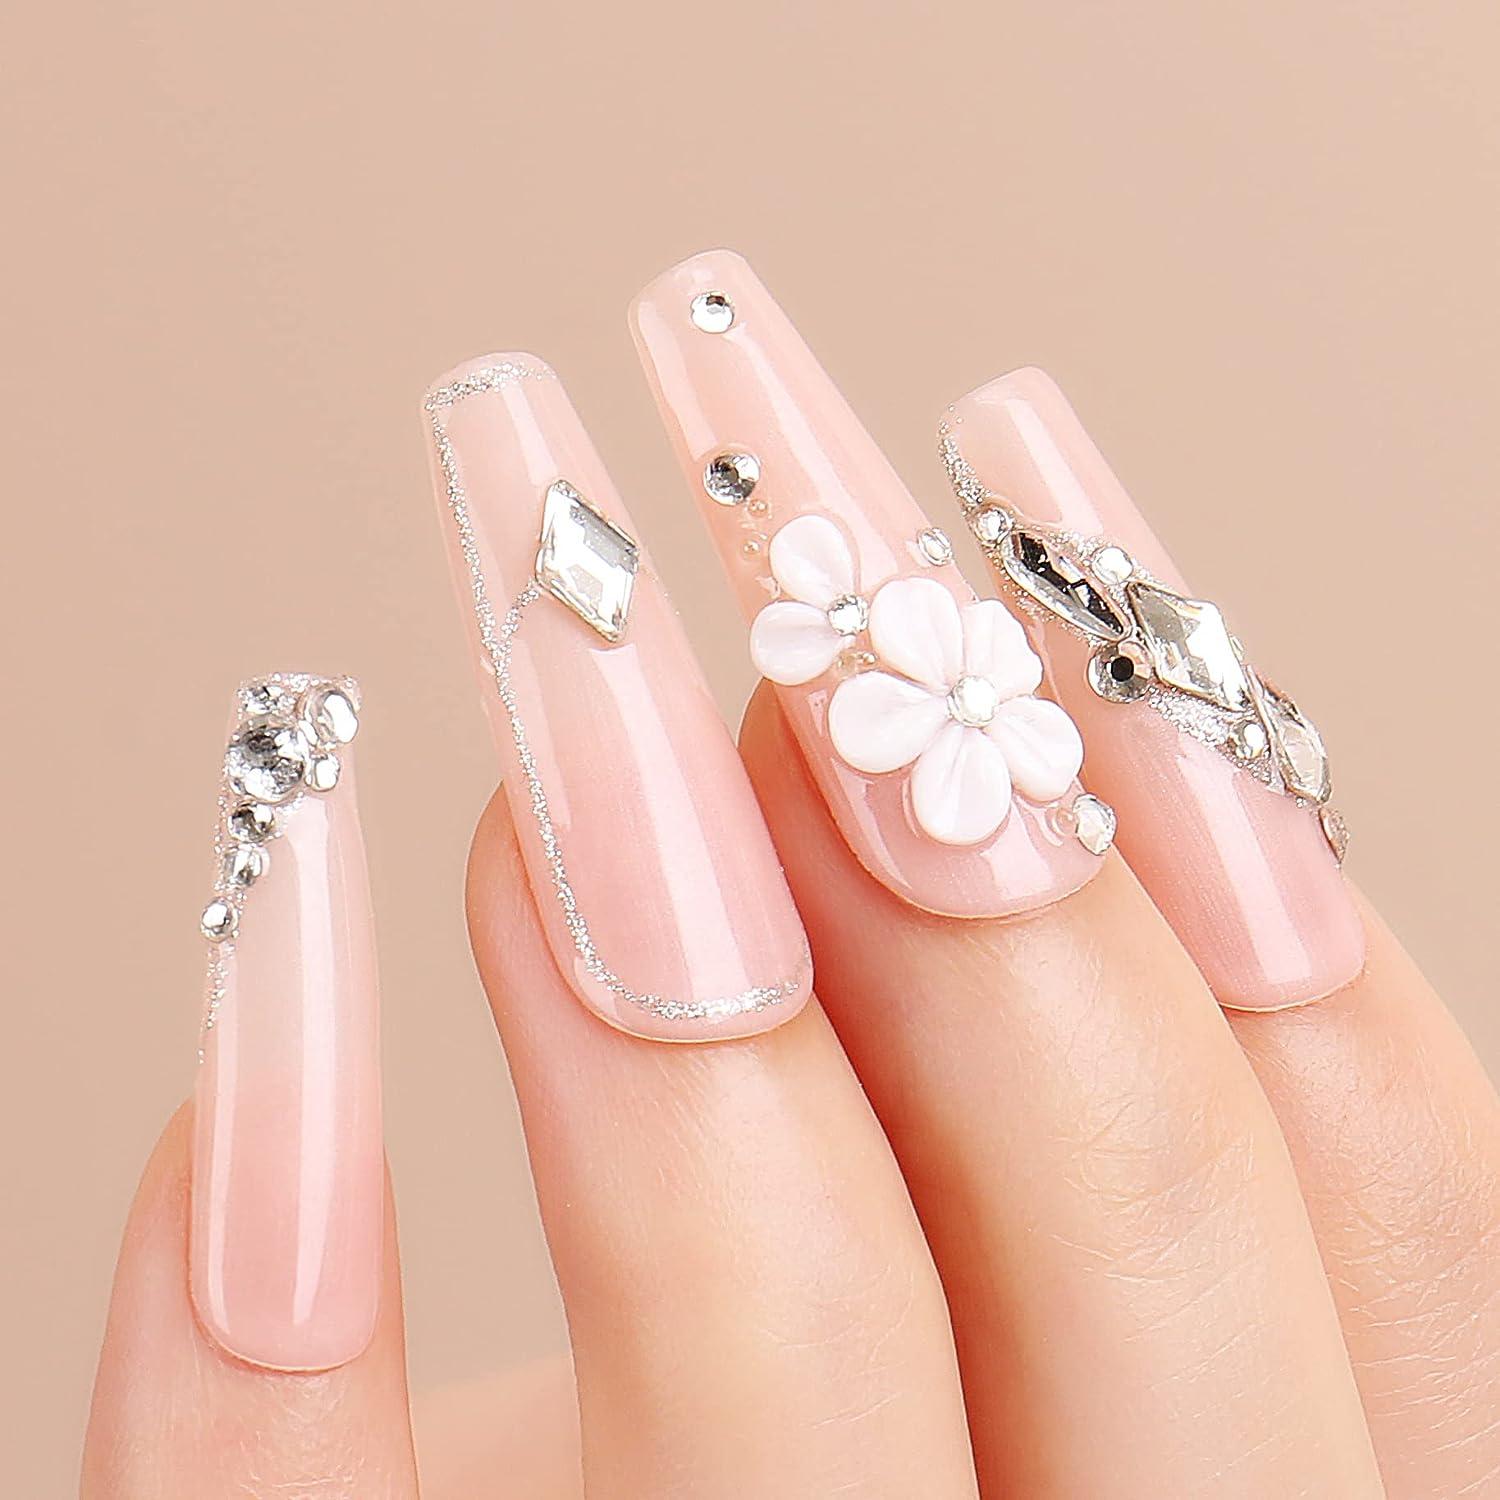 Premium Photo | A nail art design for a girl's nails.